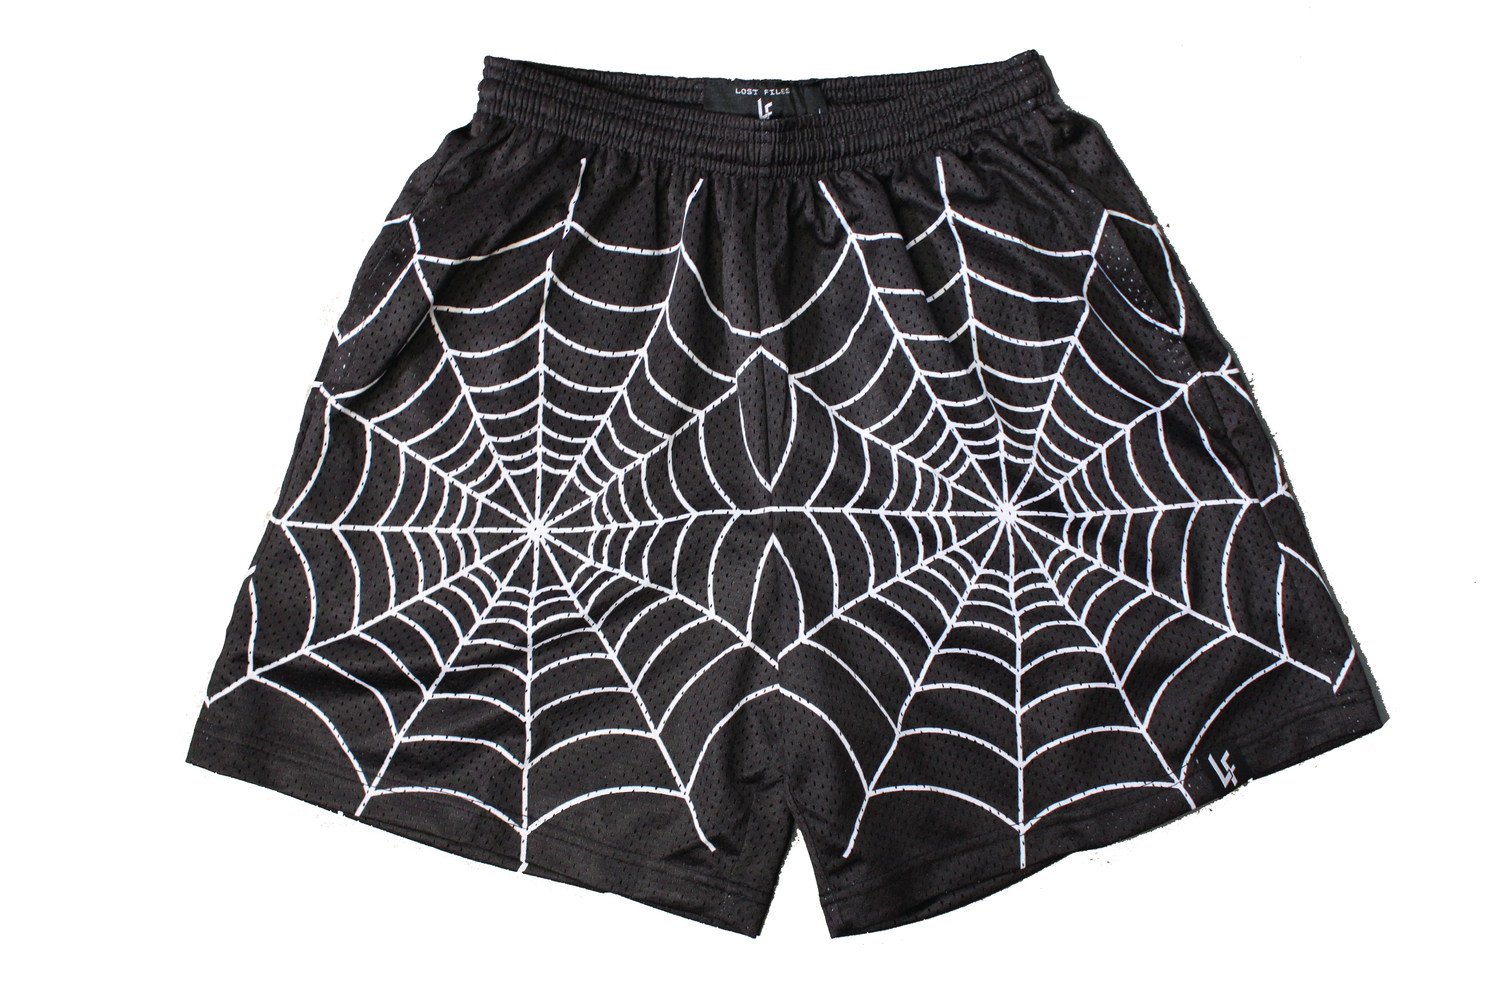 Spider Web Shorts